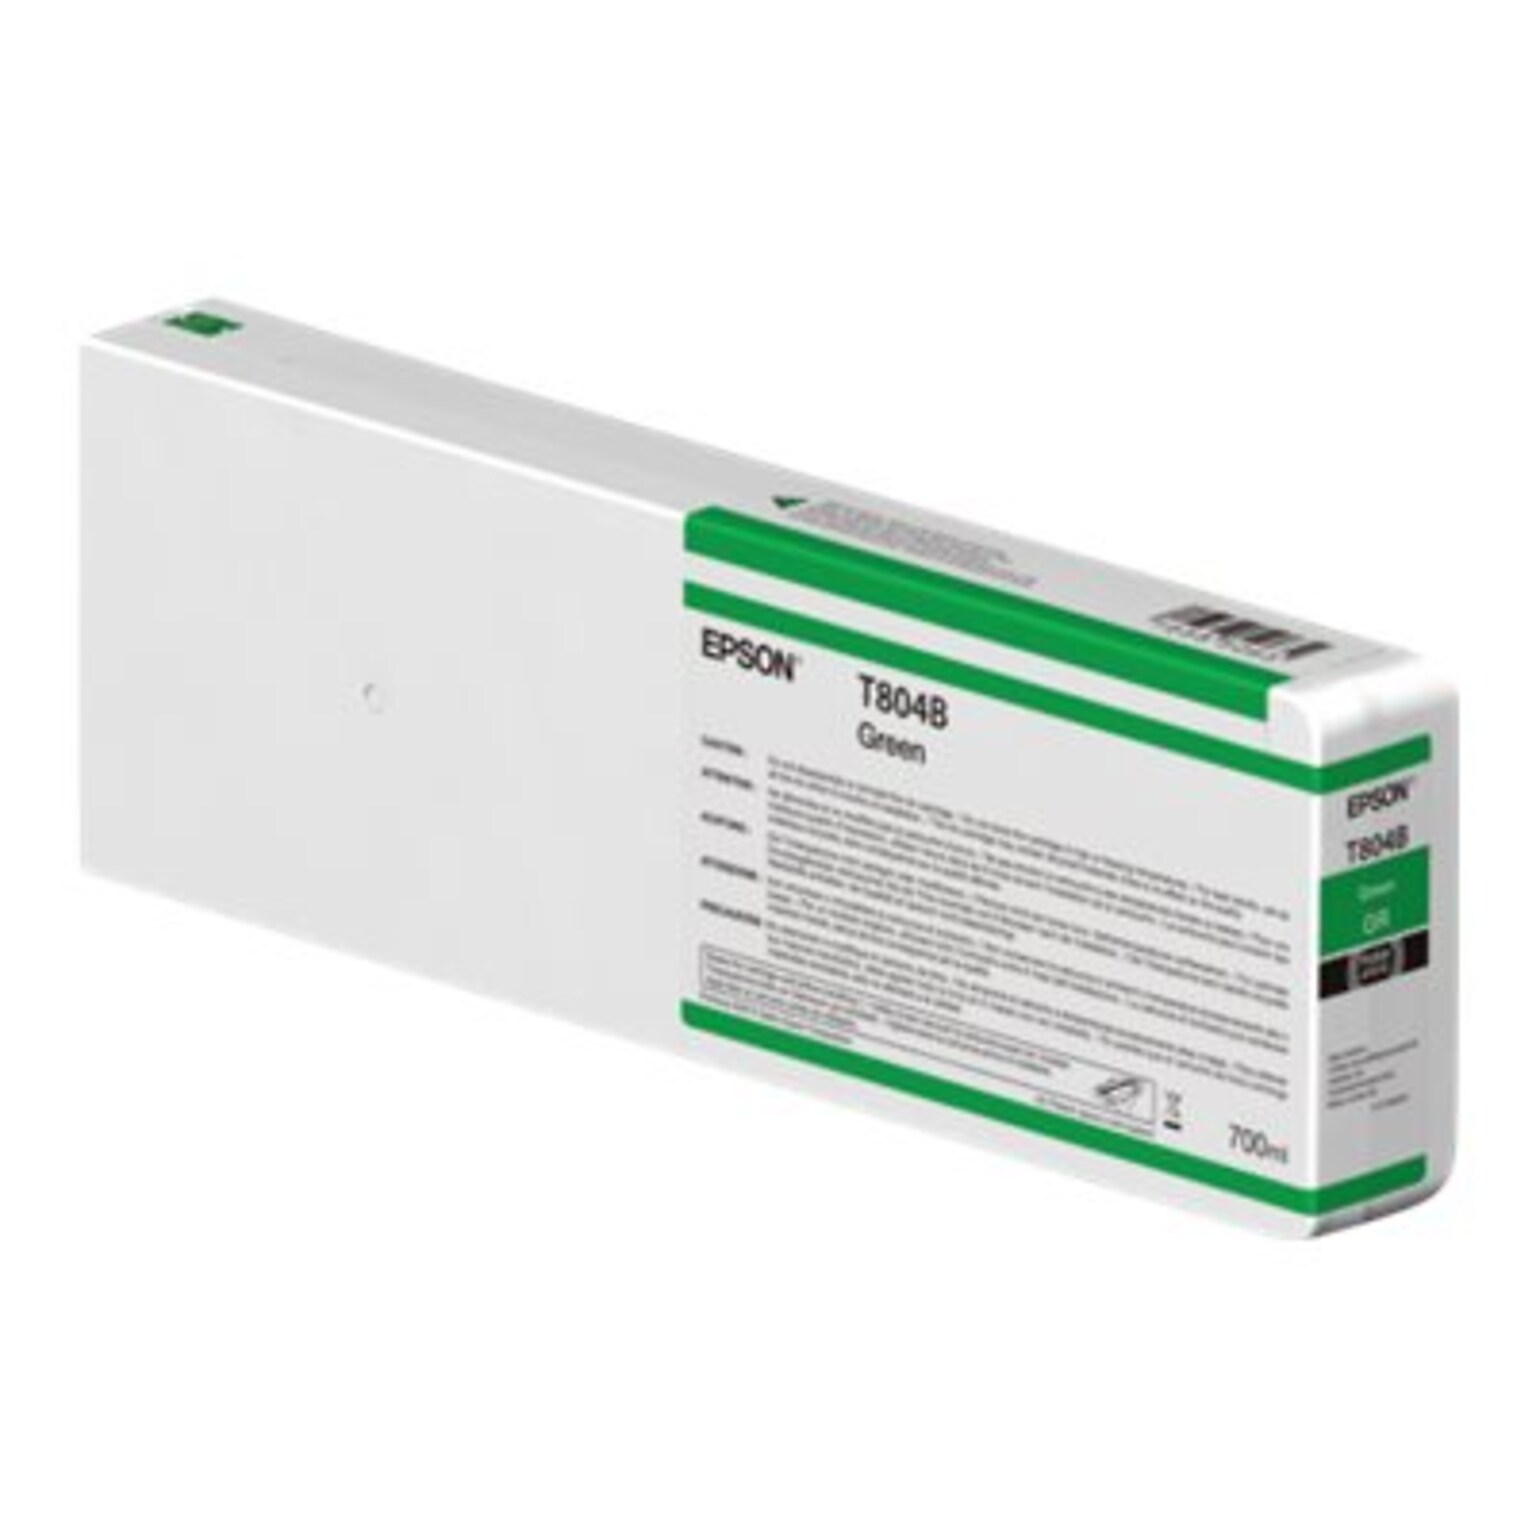 Epson T804B00 Green Standard Yield Ink Cartridge